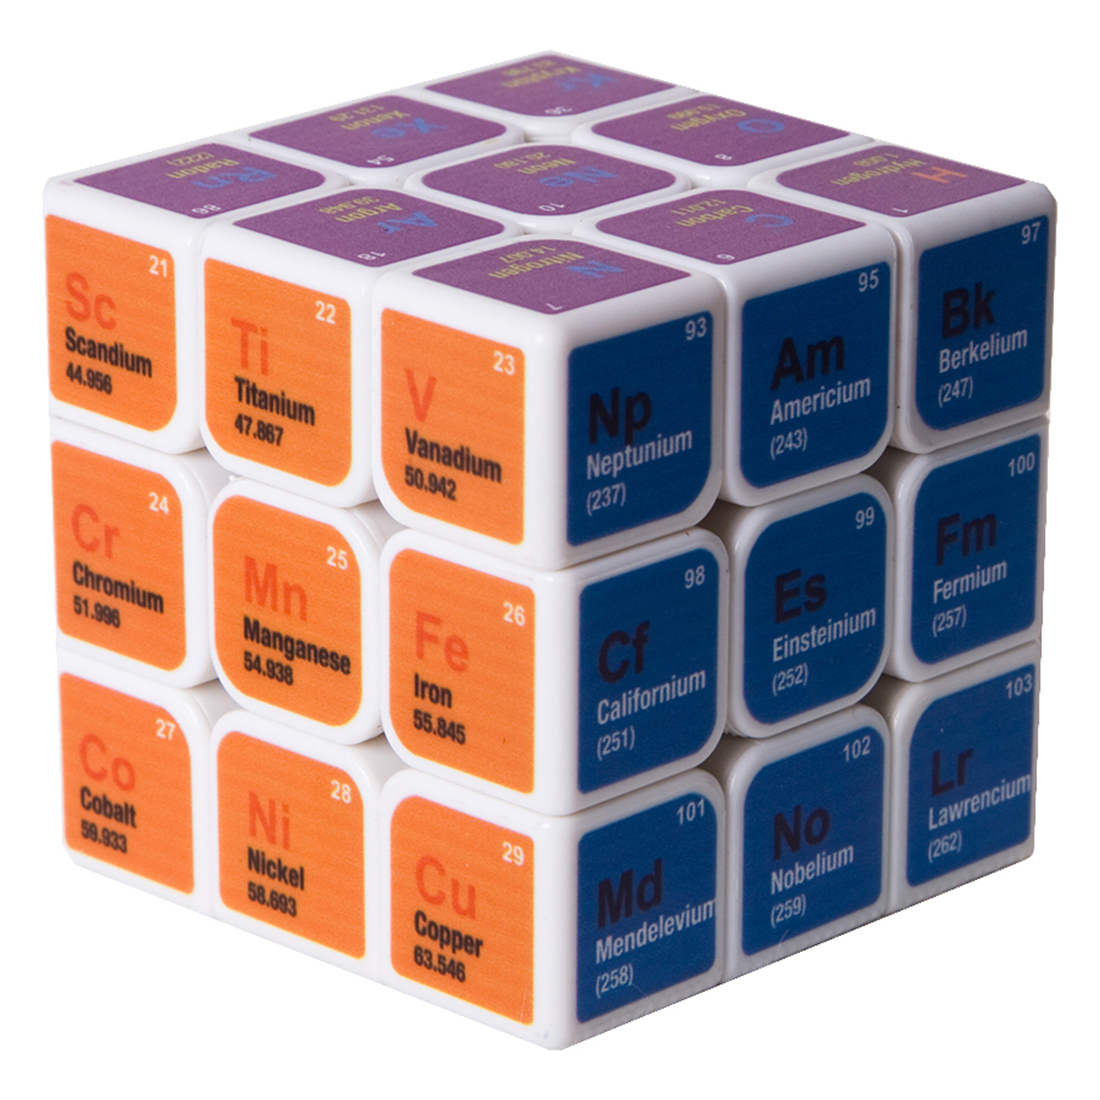 FangMo UV Chemical 3x3 Magic Cube - White